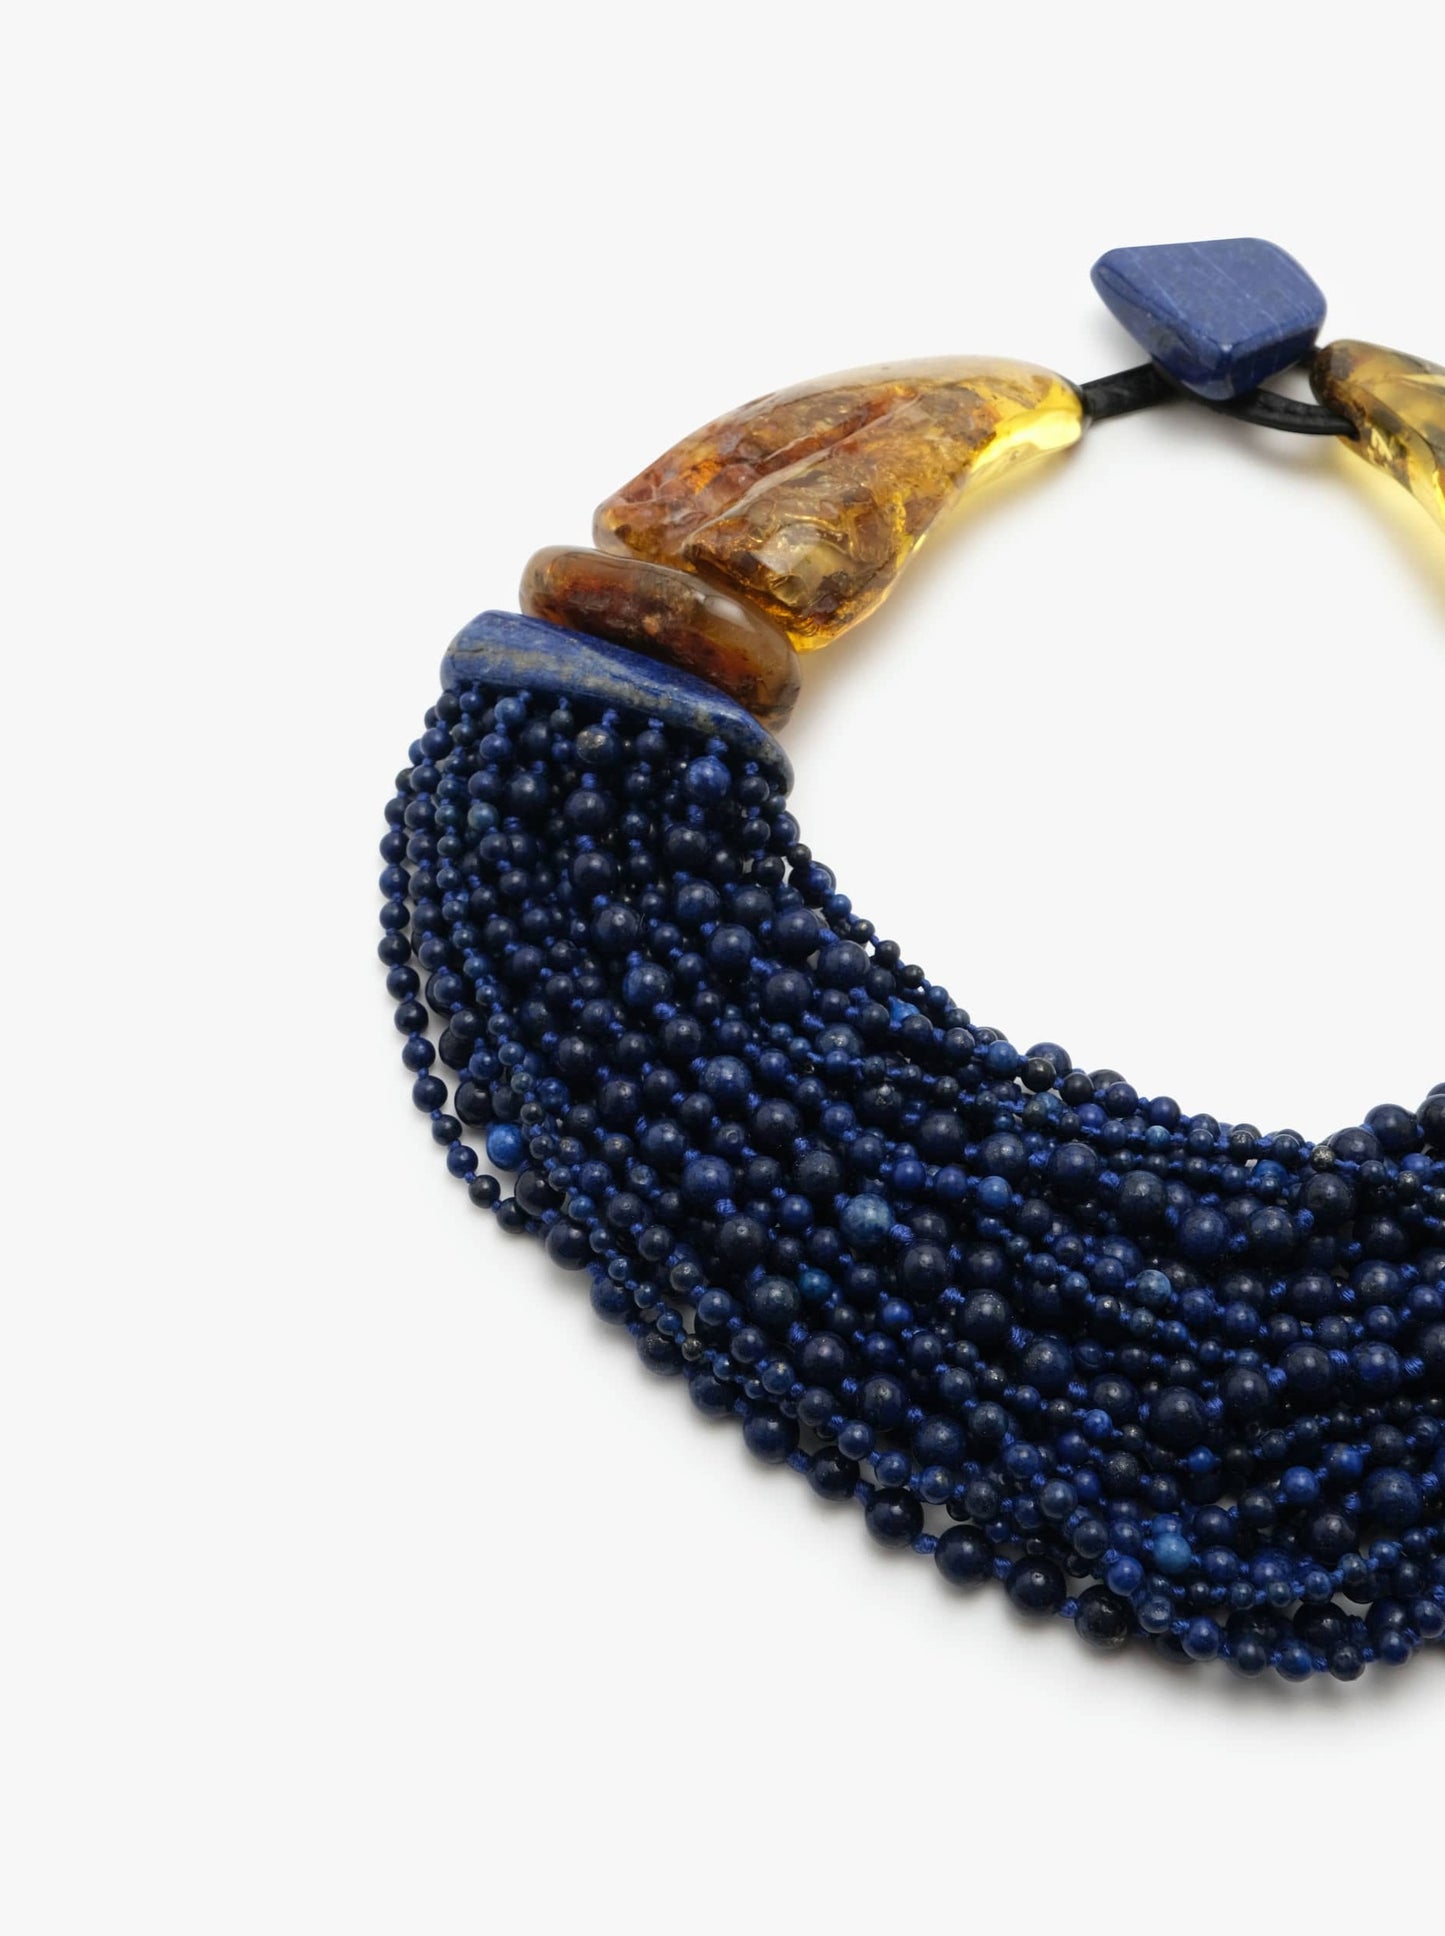 Necklace: Lapis lazuli & amber